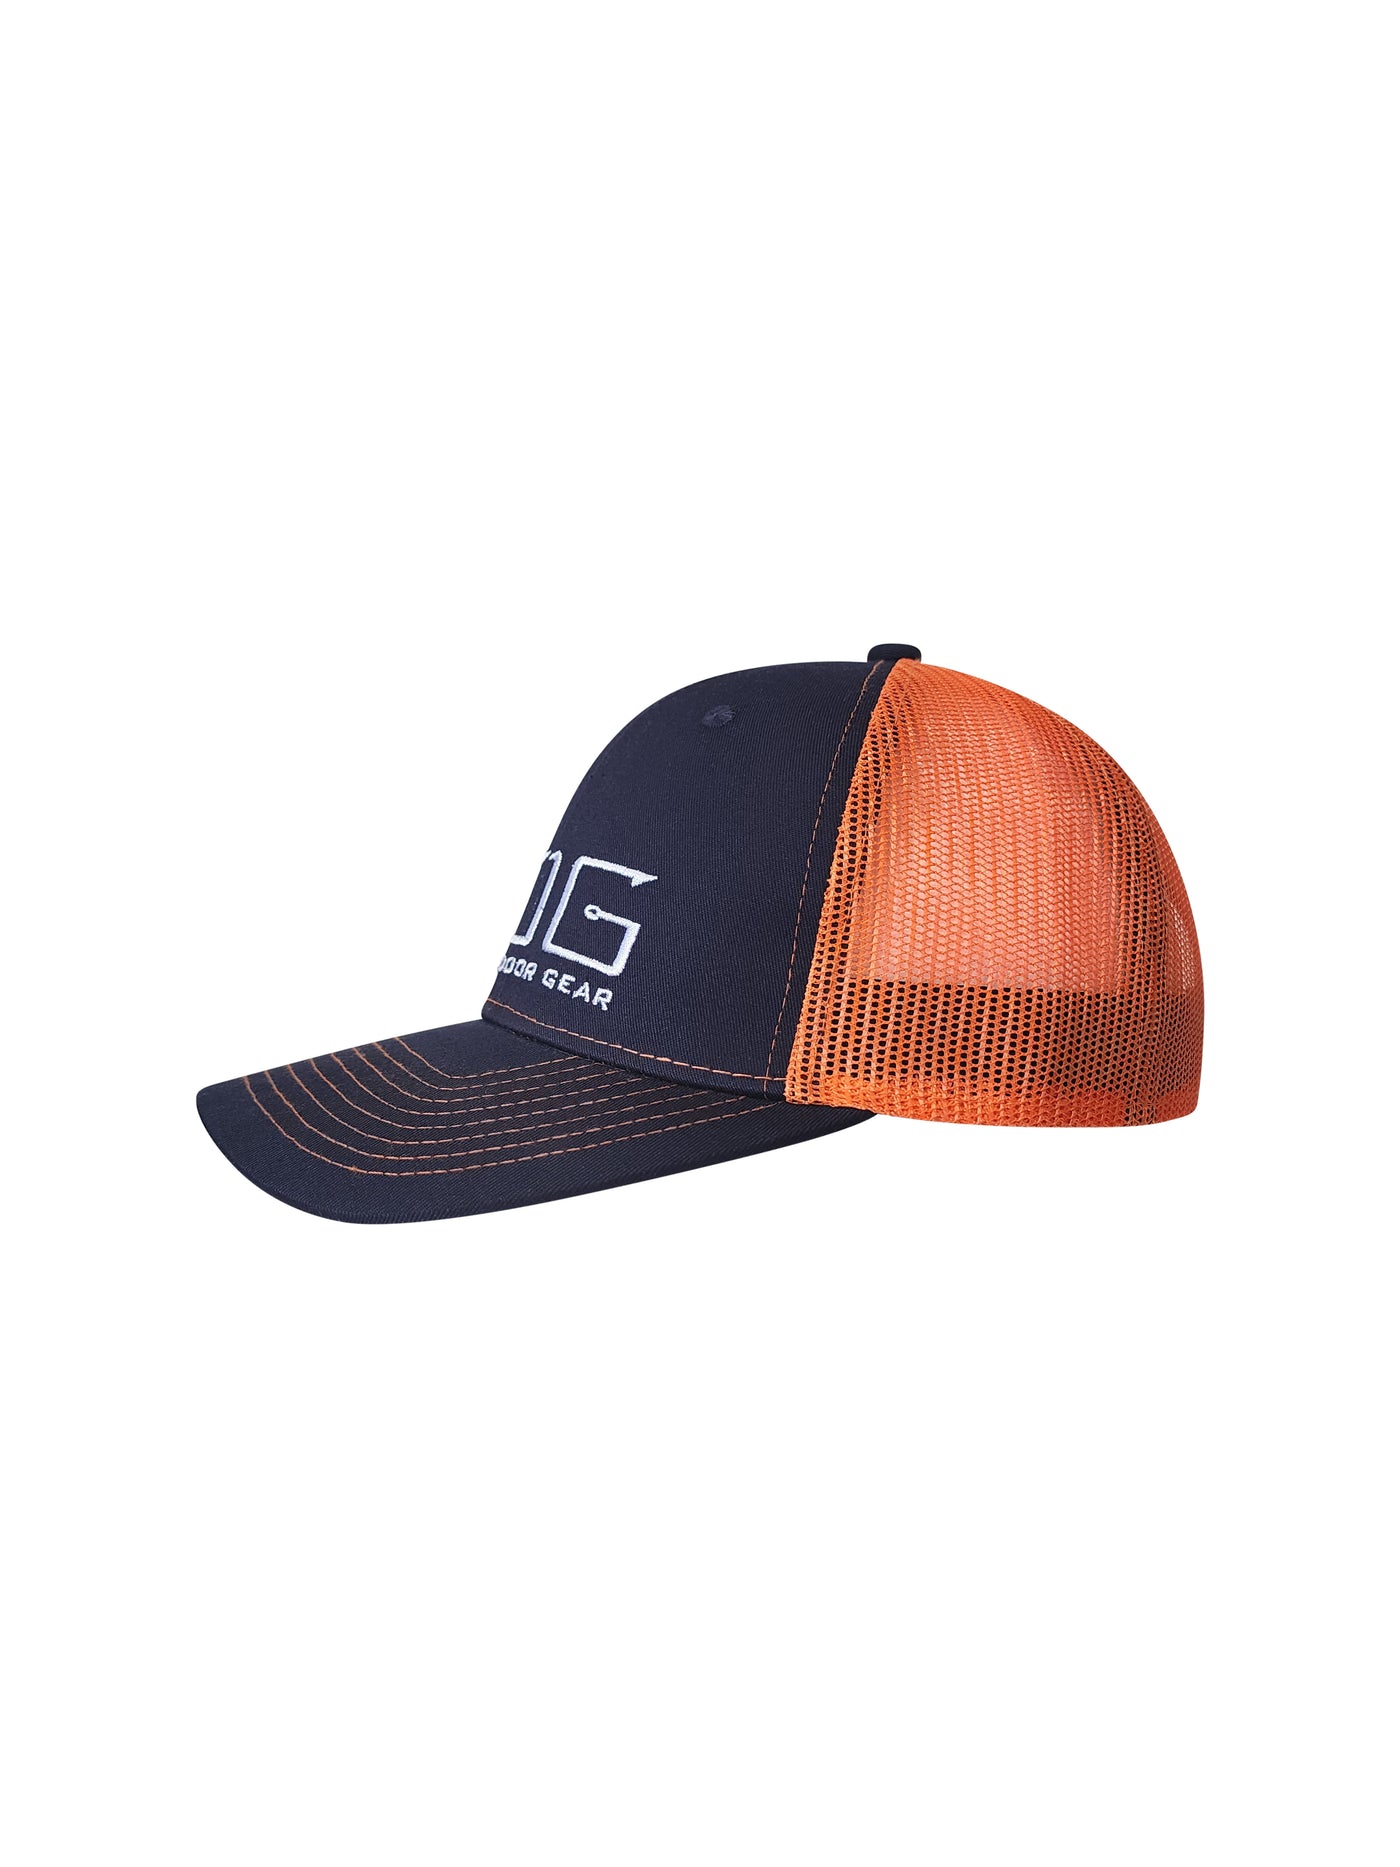 Richardson Style Fishing Hats Online